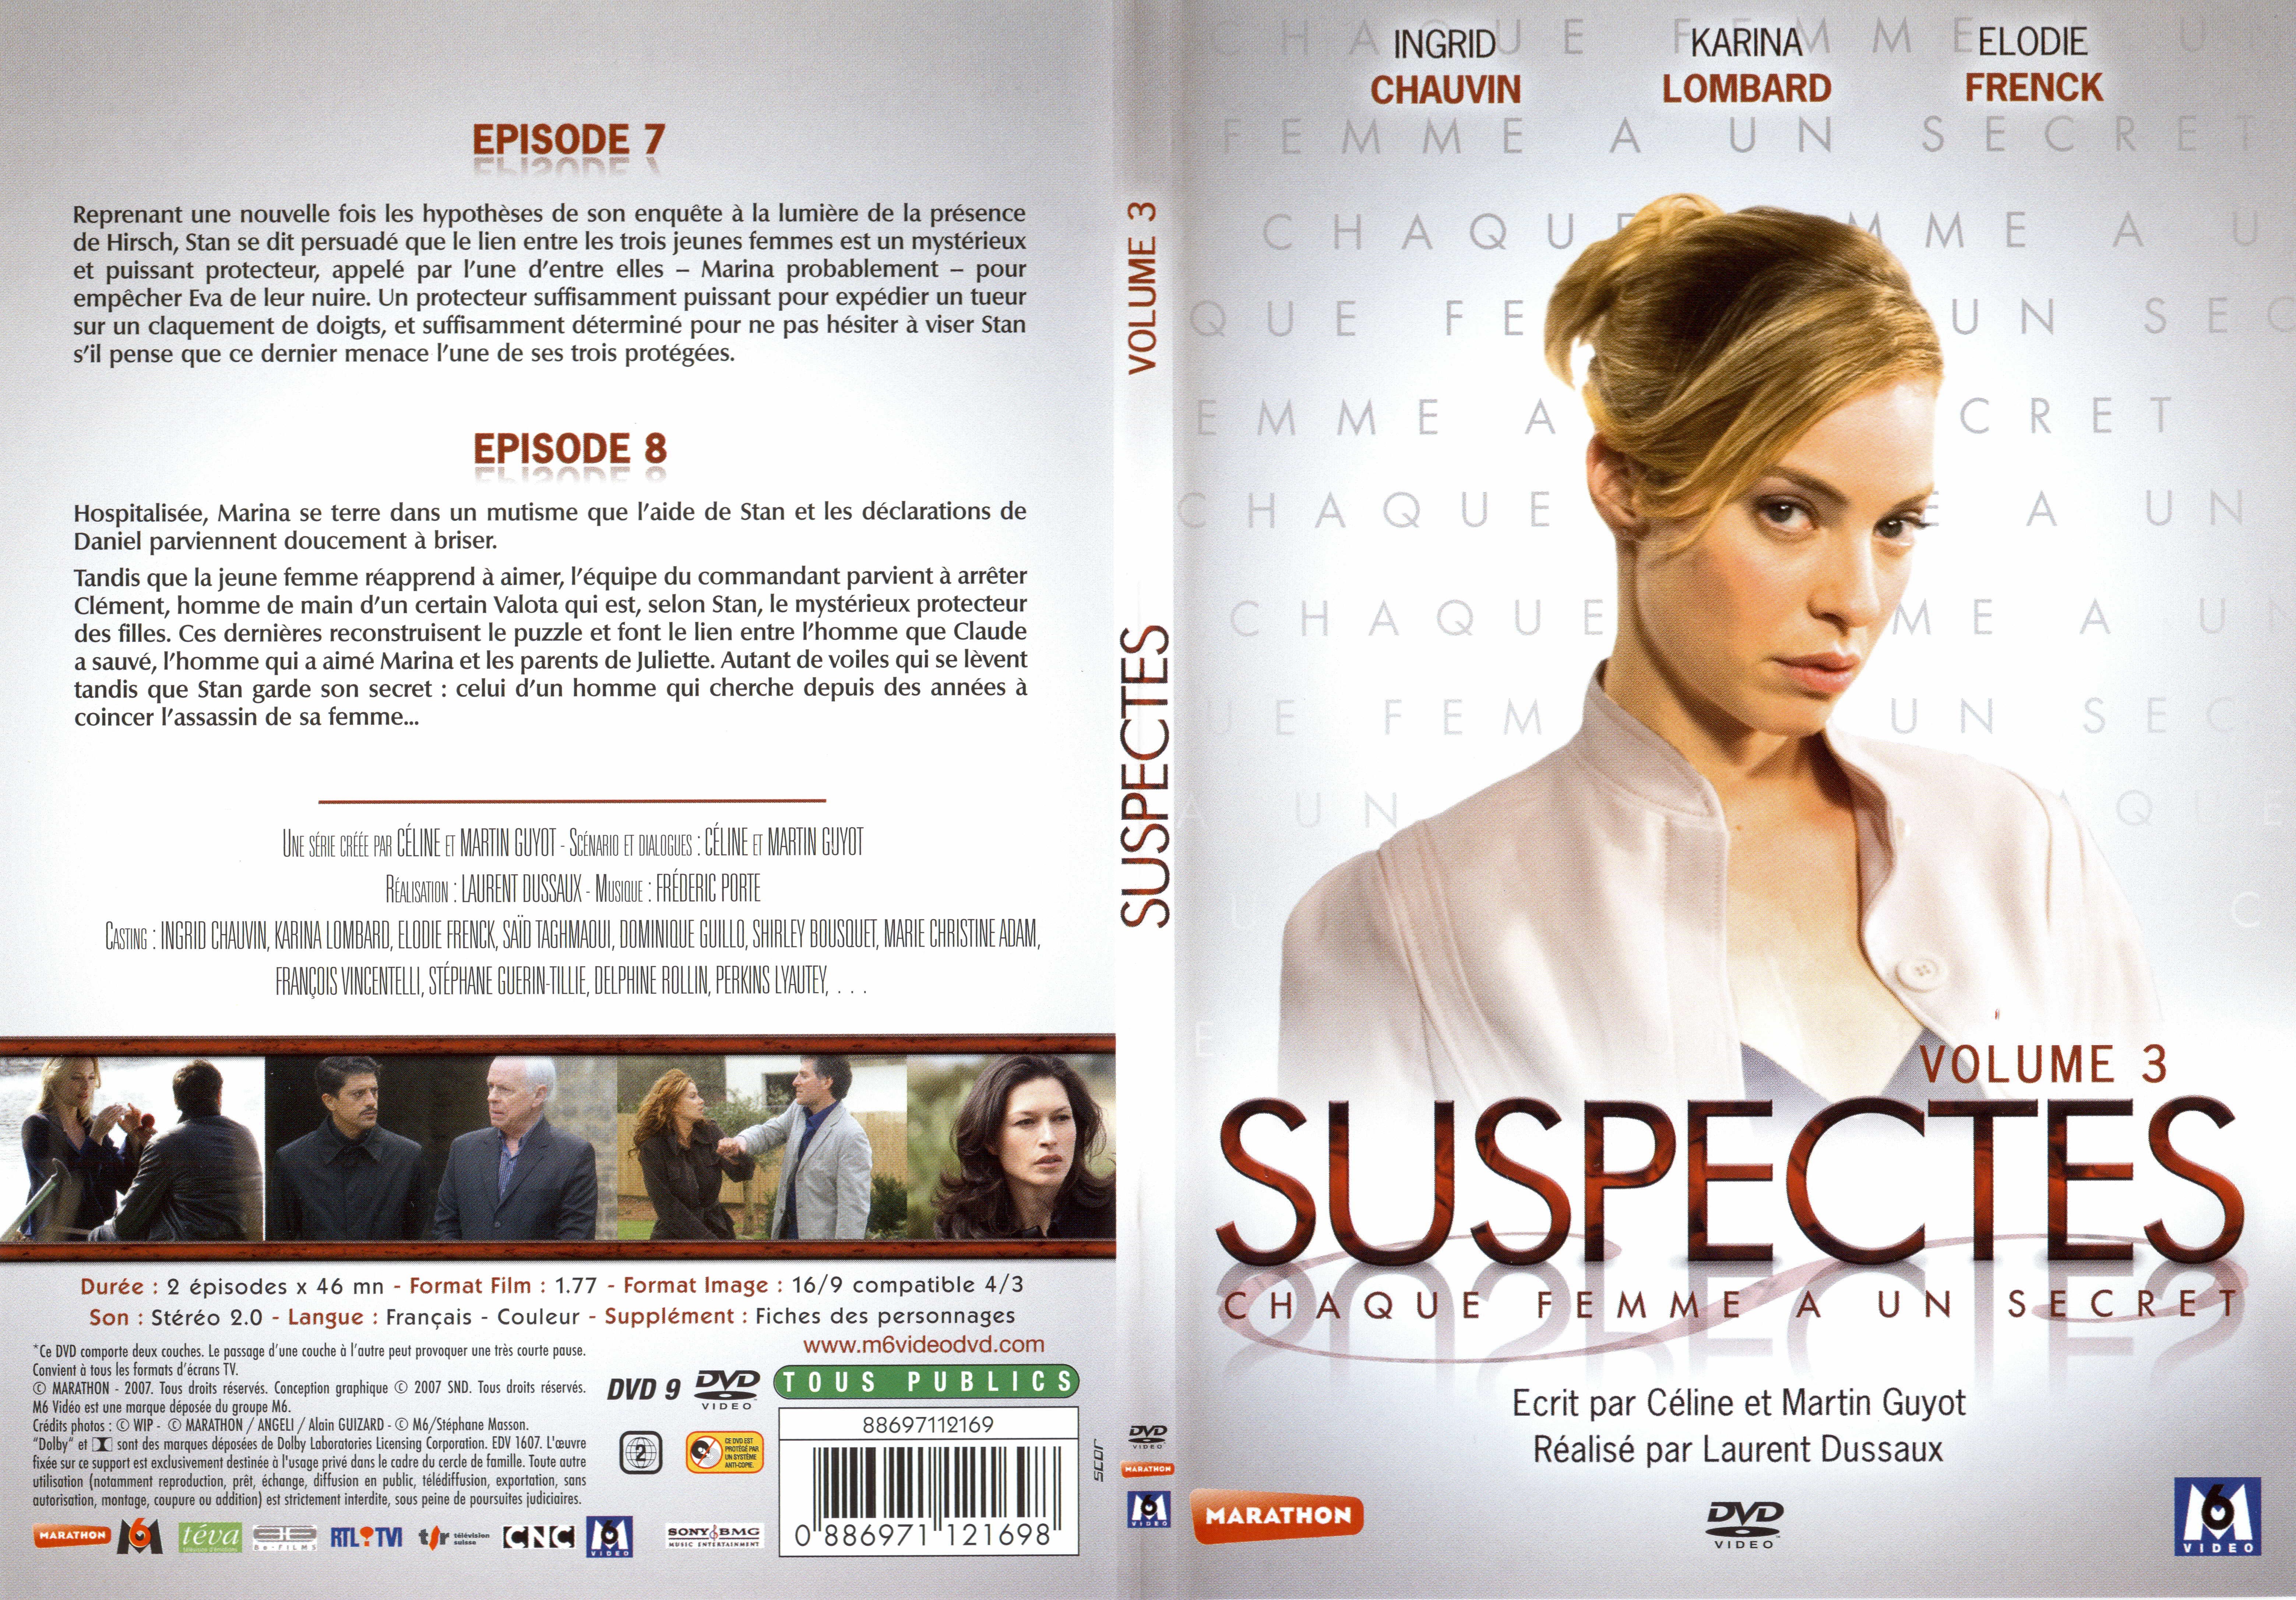 Jaquette DVD Suspectes vol 3